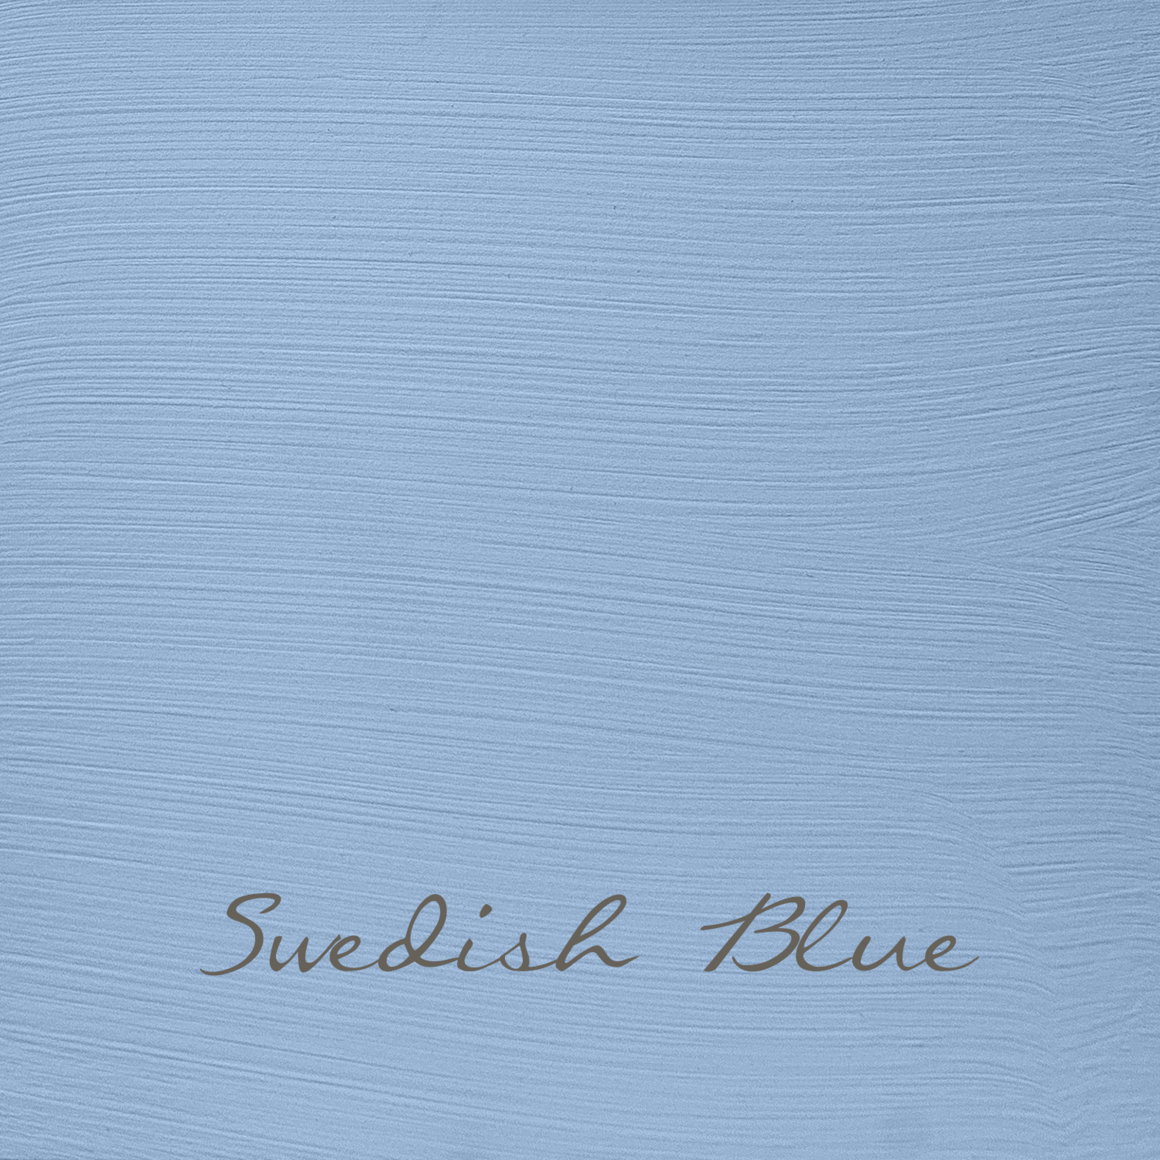 Swedish Blue - Foresta